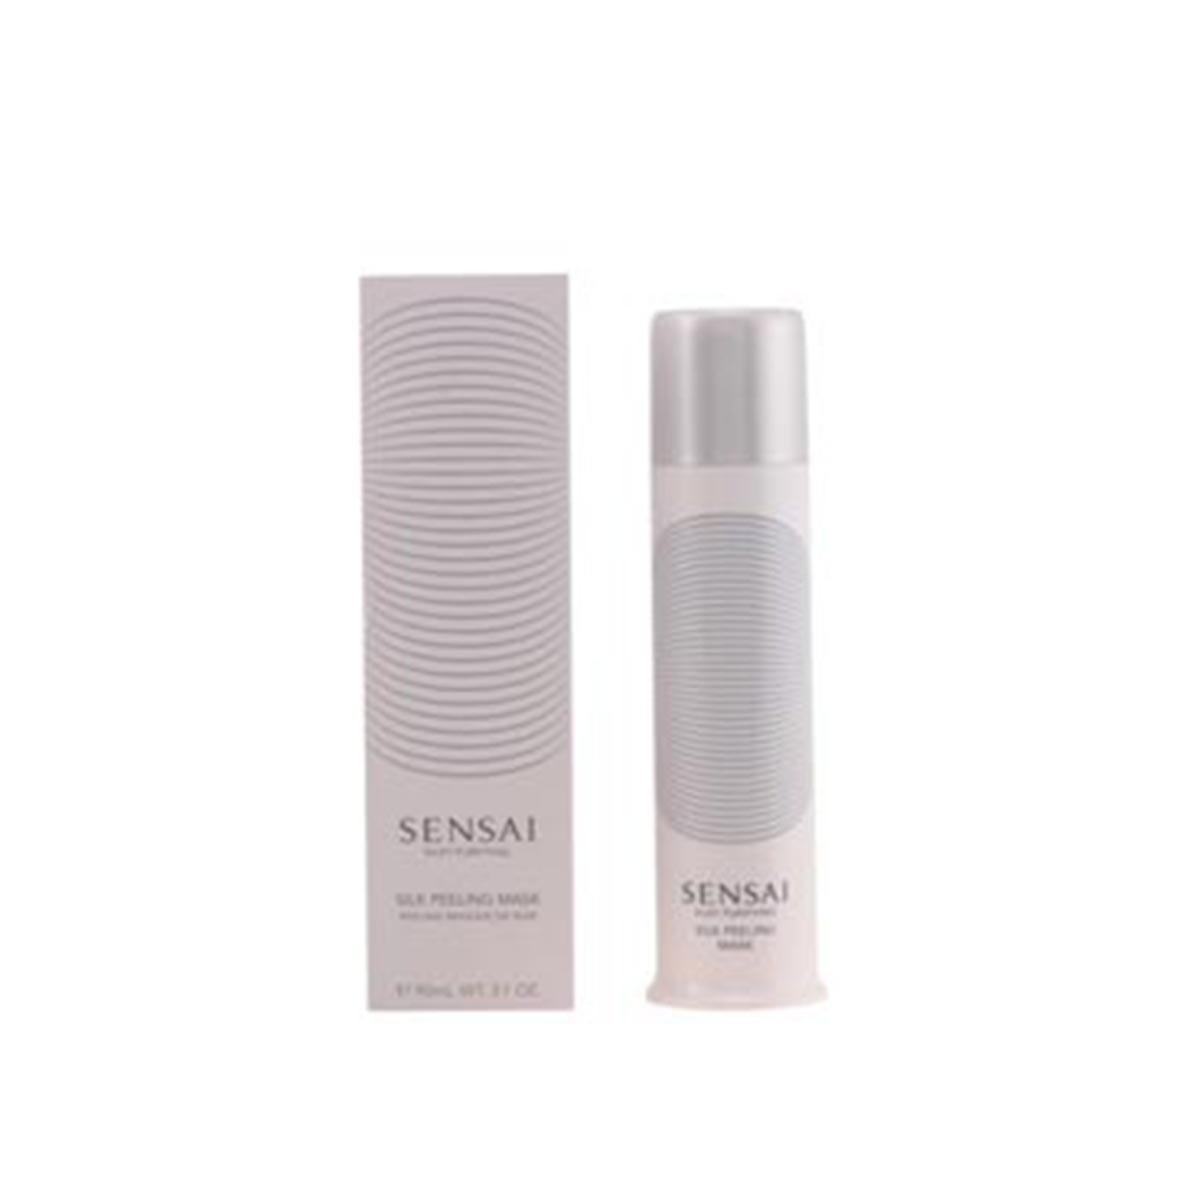 kanebo-sensai-silky-purifying-peeling-masker-90ml